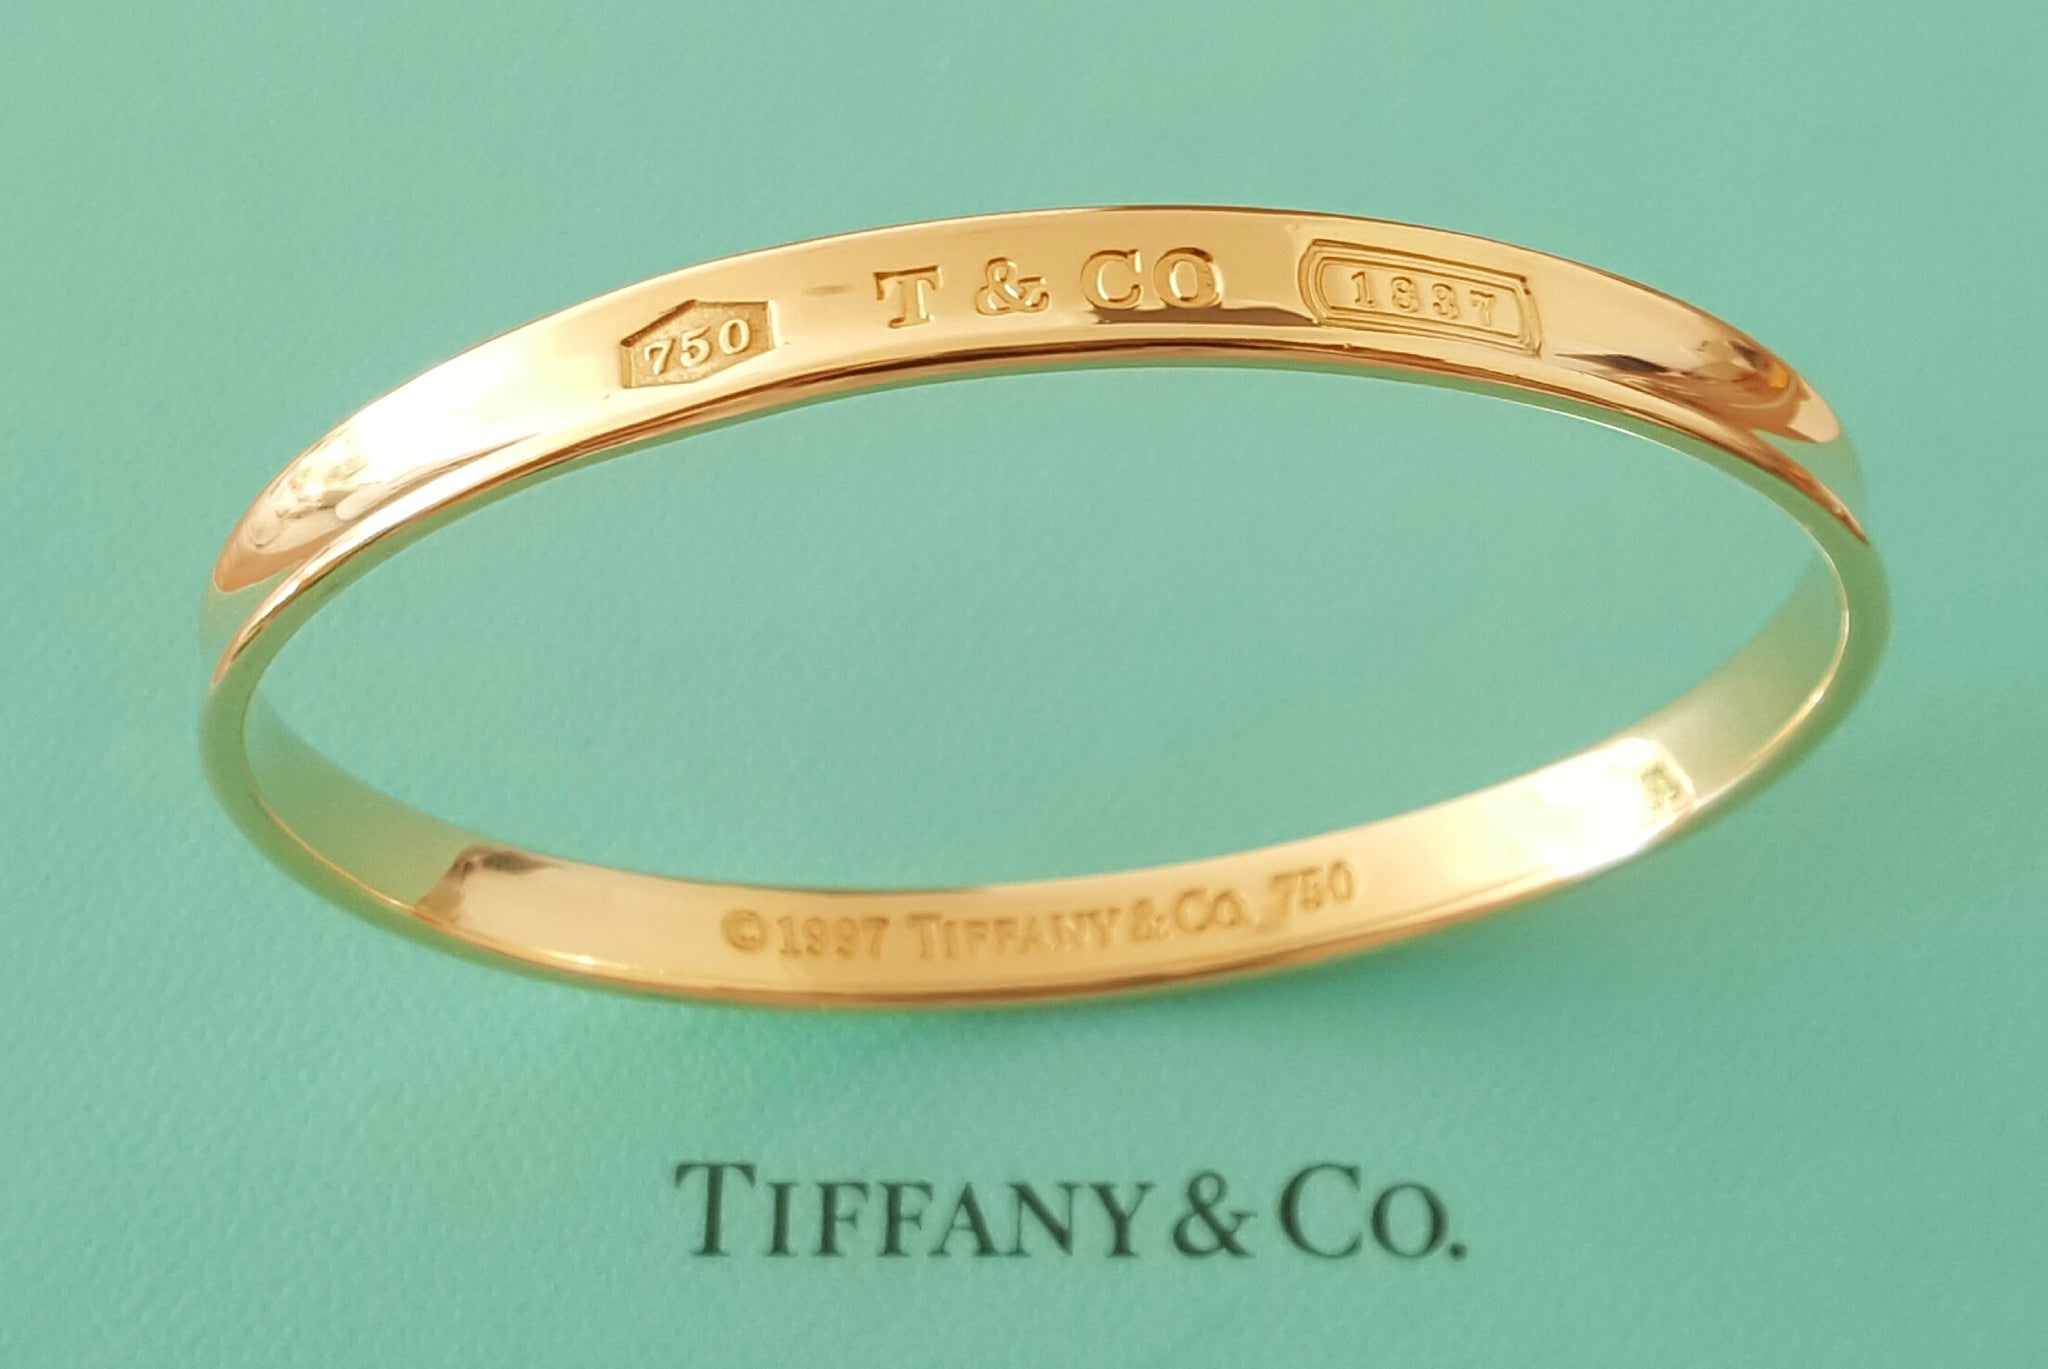 tiffany and co 750 bracelet